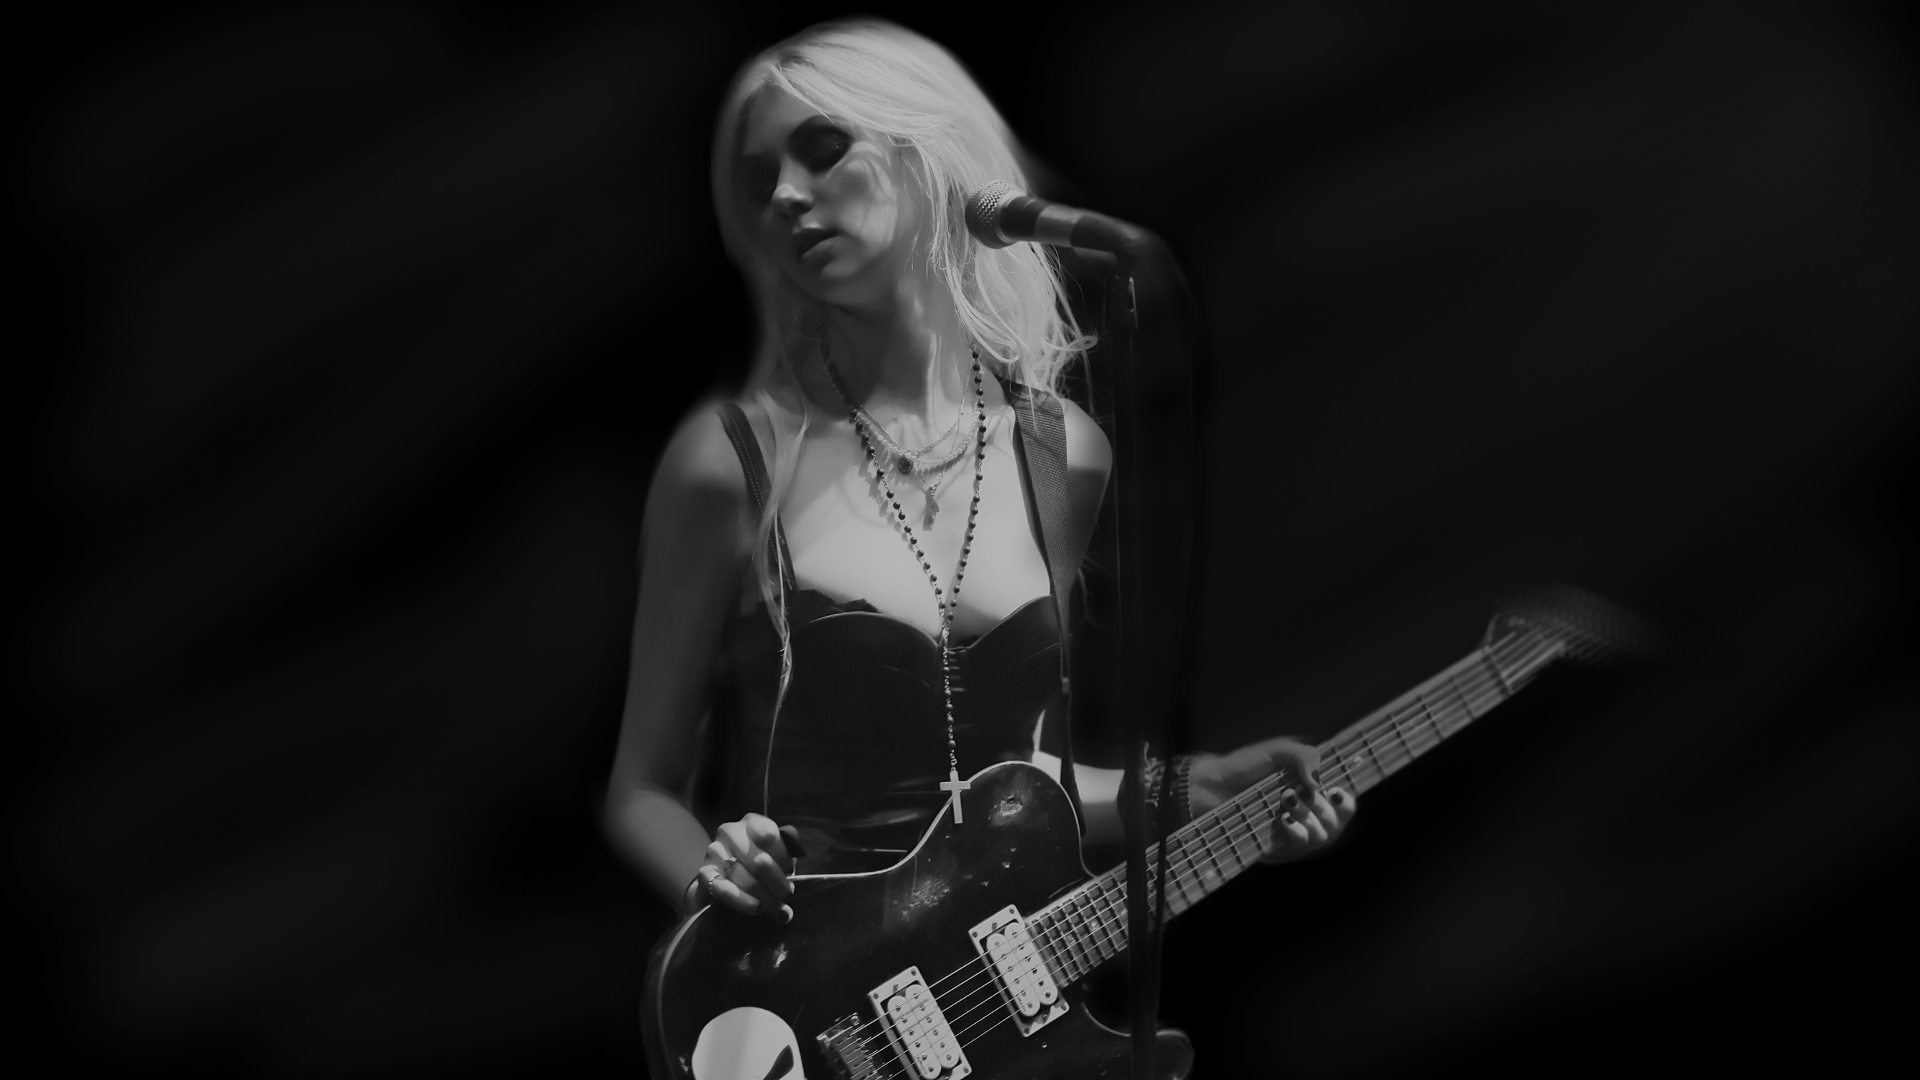 Taylor Momsen Background 3 by AirTease on DeviantArt